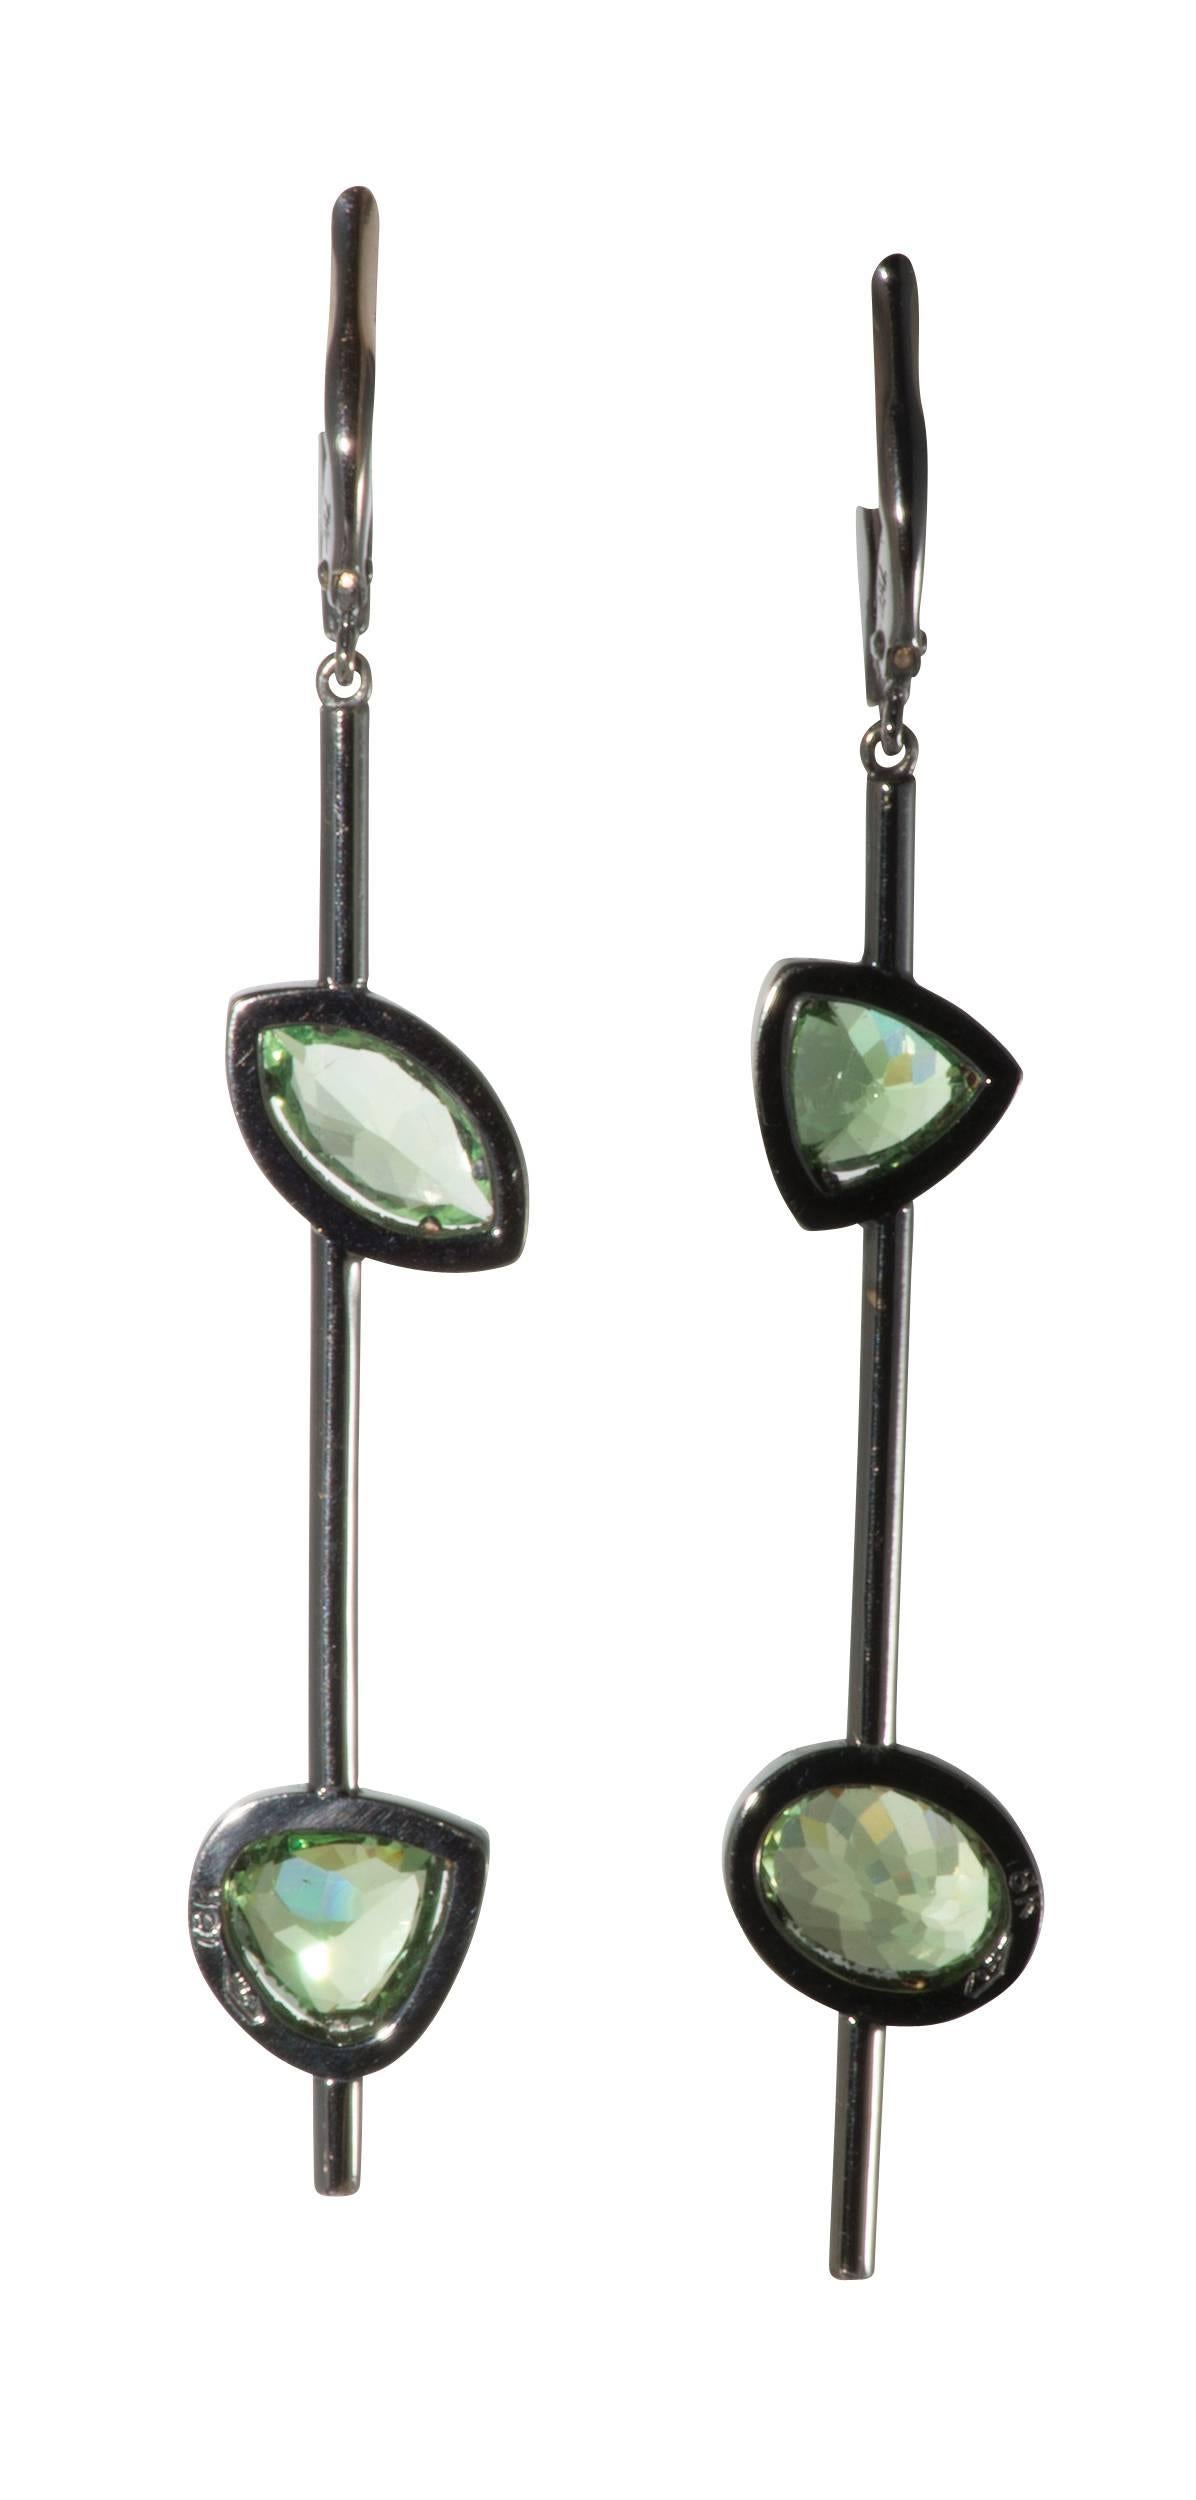 These are striking diamond and demantoid garnet drop earrings set in blackened 18k white gold.